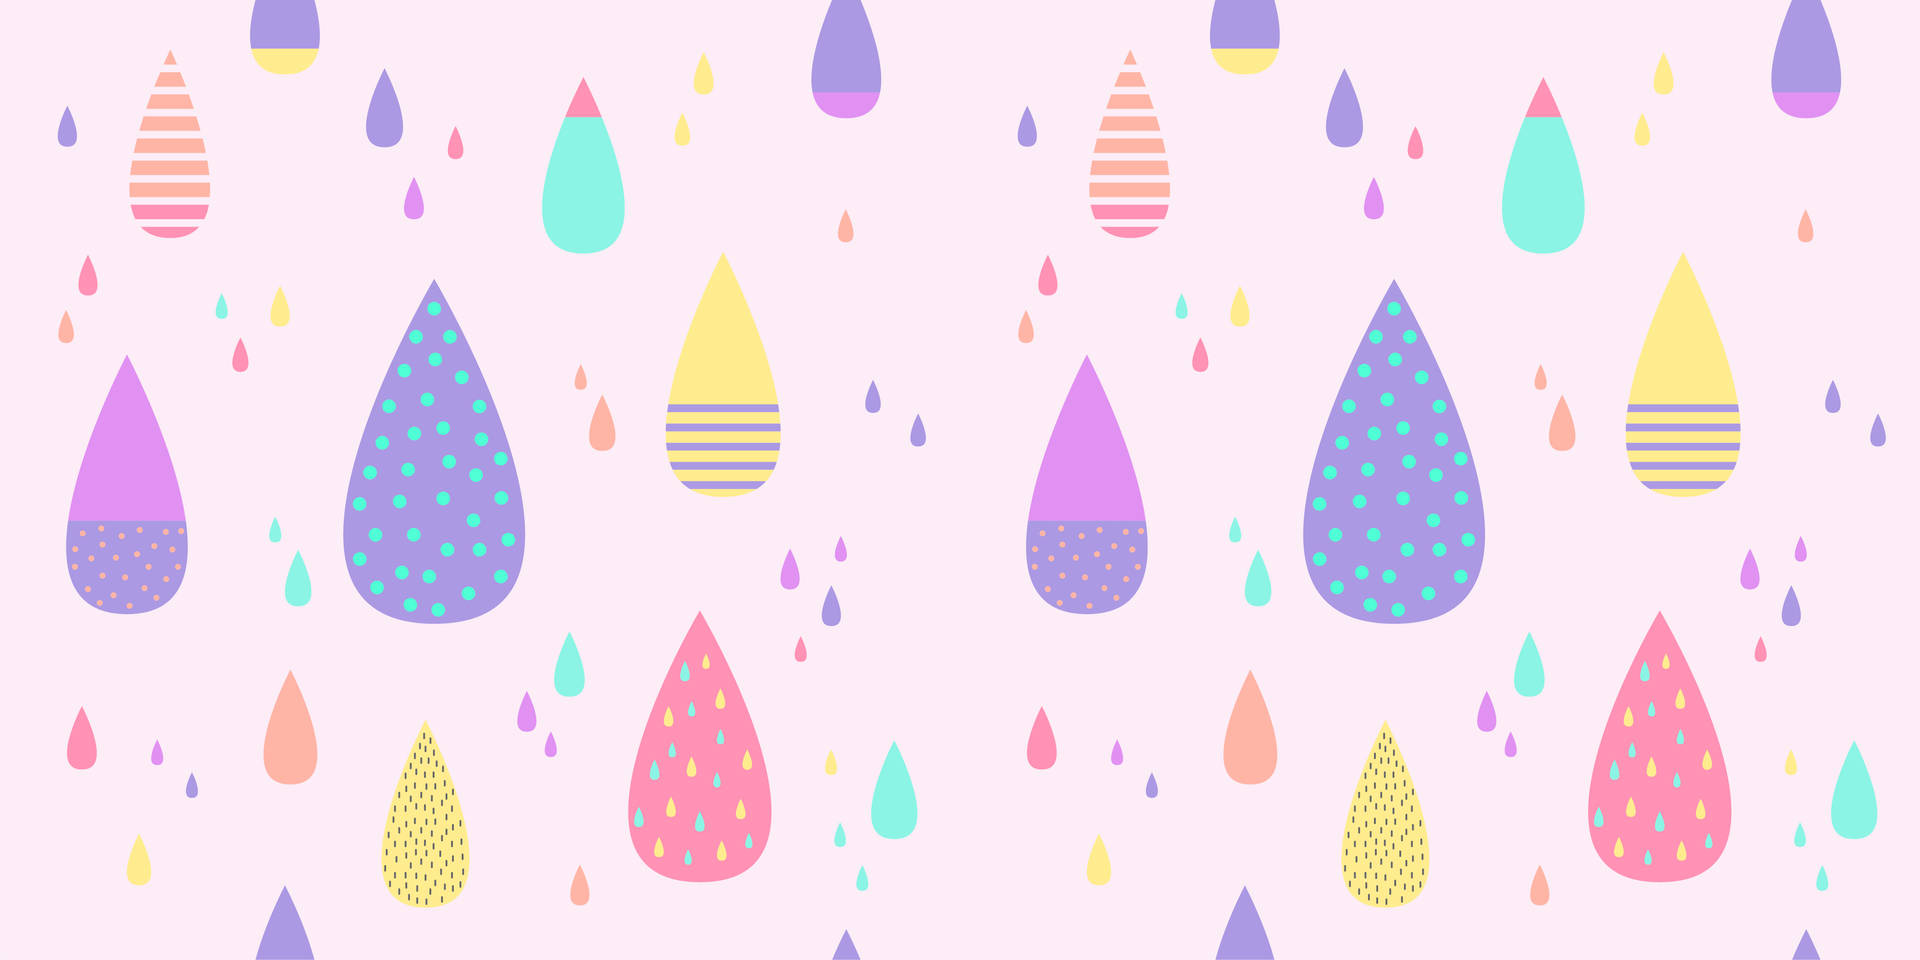 Colorful tears inspired art design Wallpaper